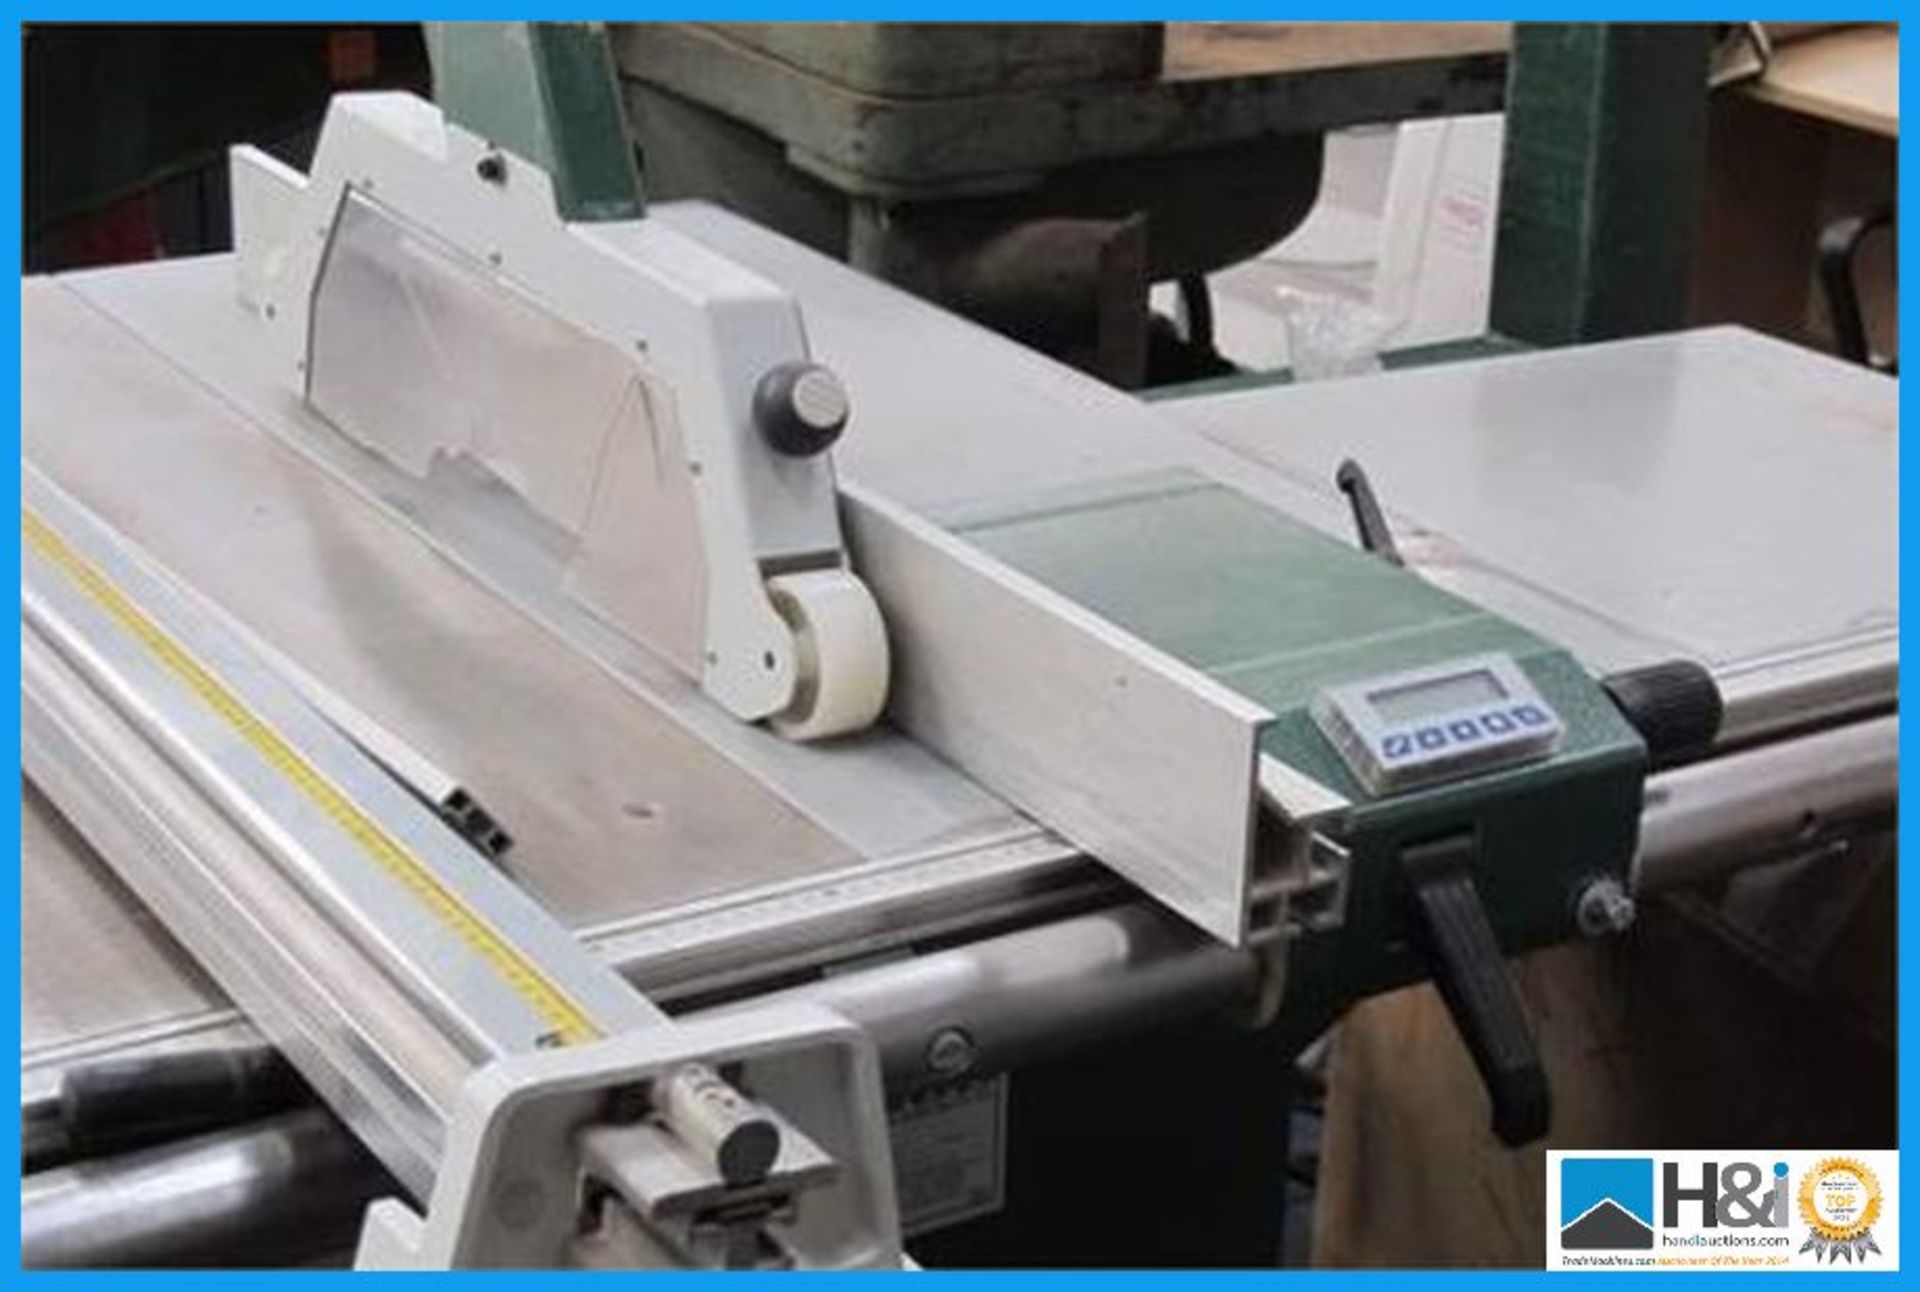 Felder K700 S Pro panel saw. Main saw and scoring / scribing unit. 2680mm slide. Year of manufacture - Image 4 of 4